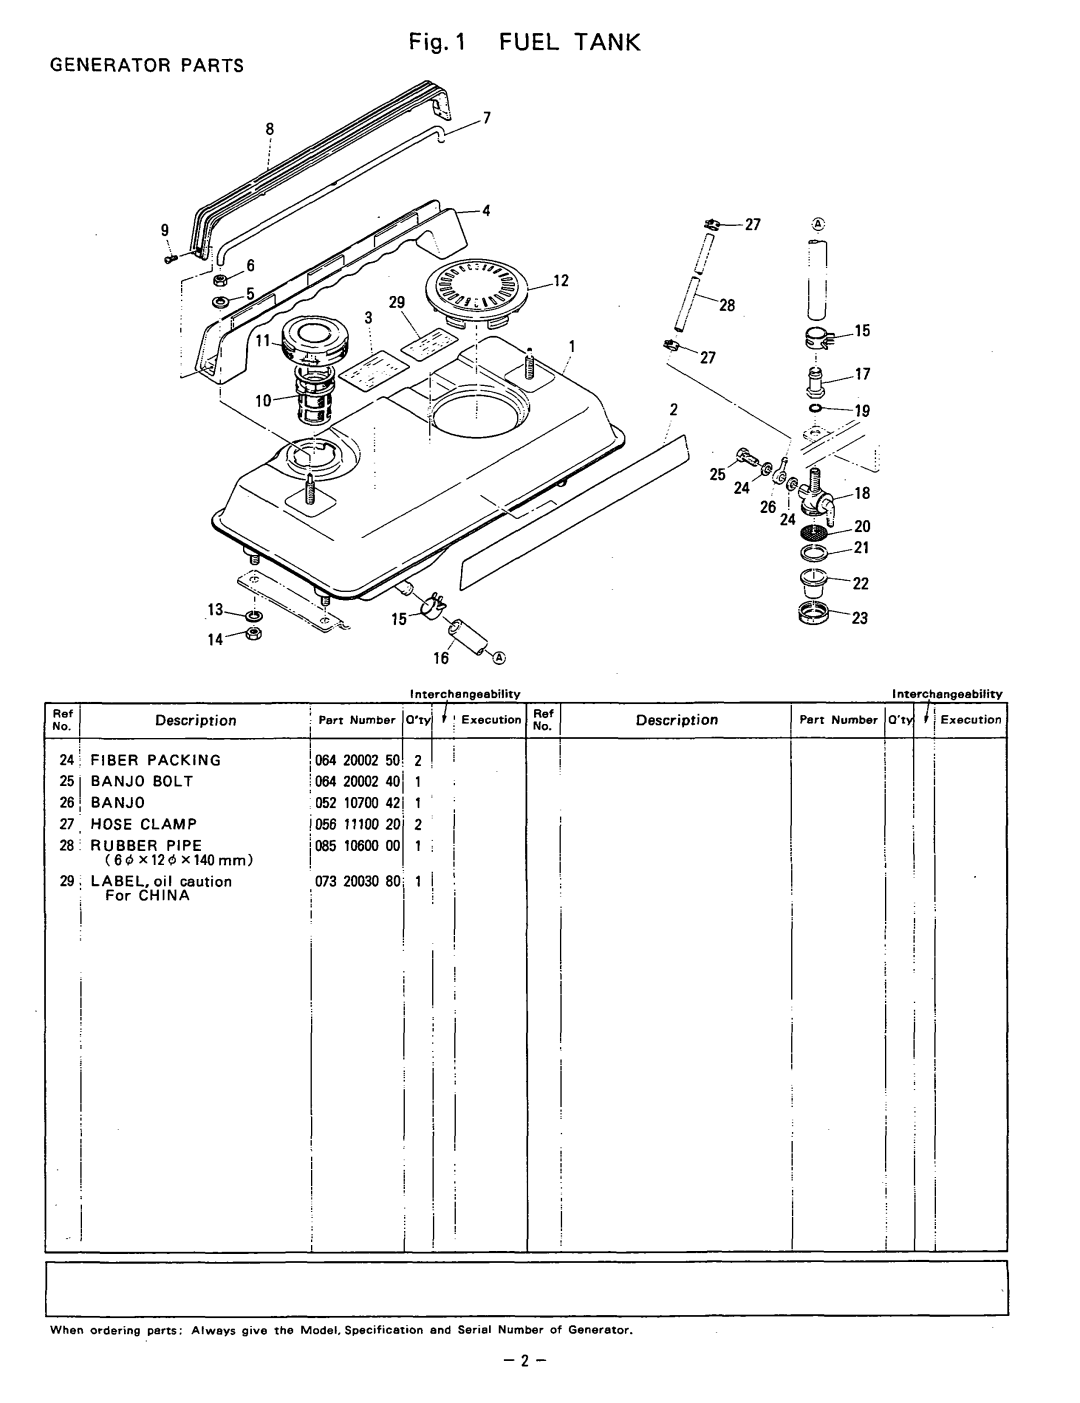 Subaru Robin Power Products R1200 manual Fuel Tank, Generatorparts 